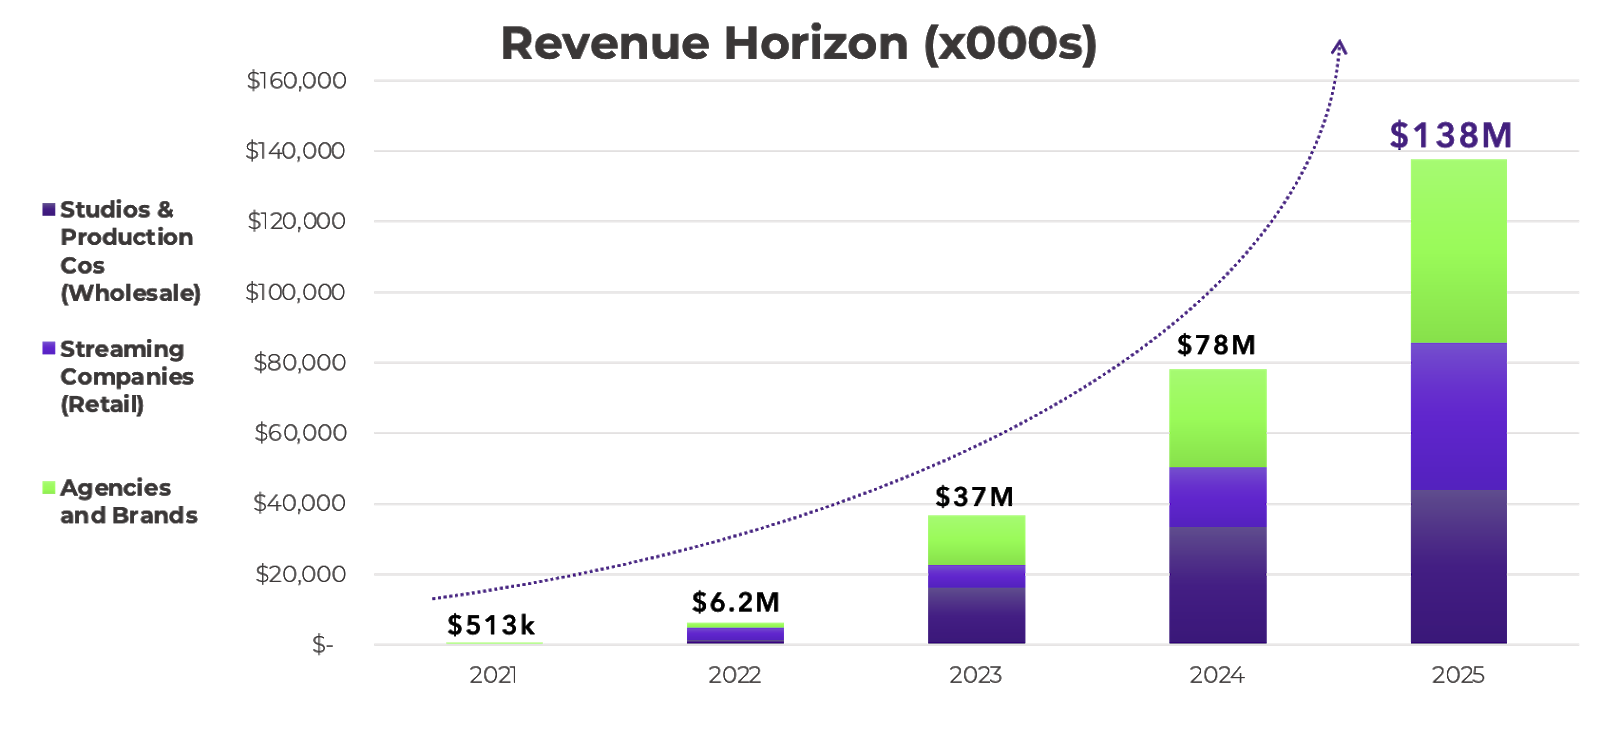 revenue-horizon